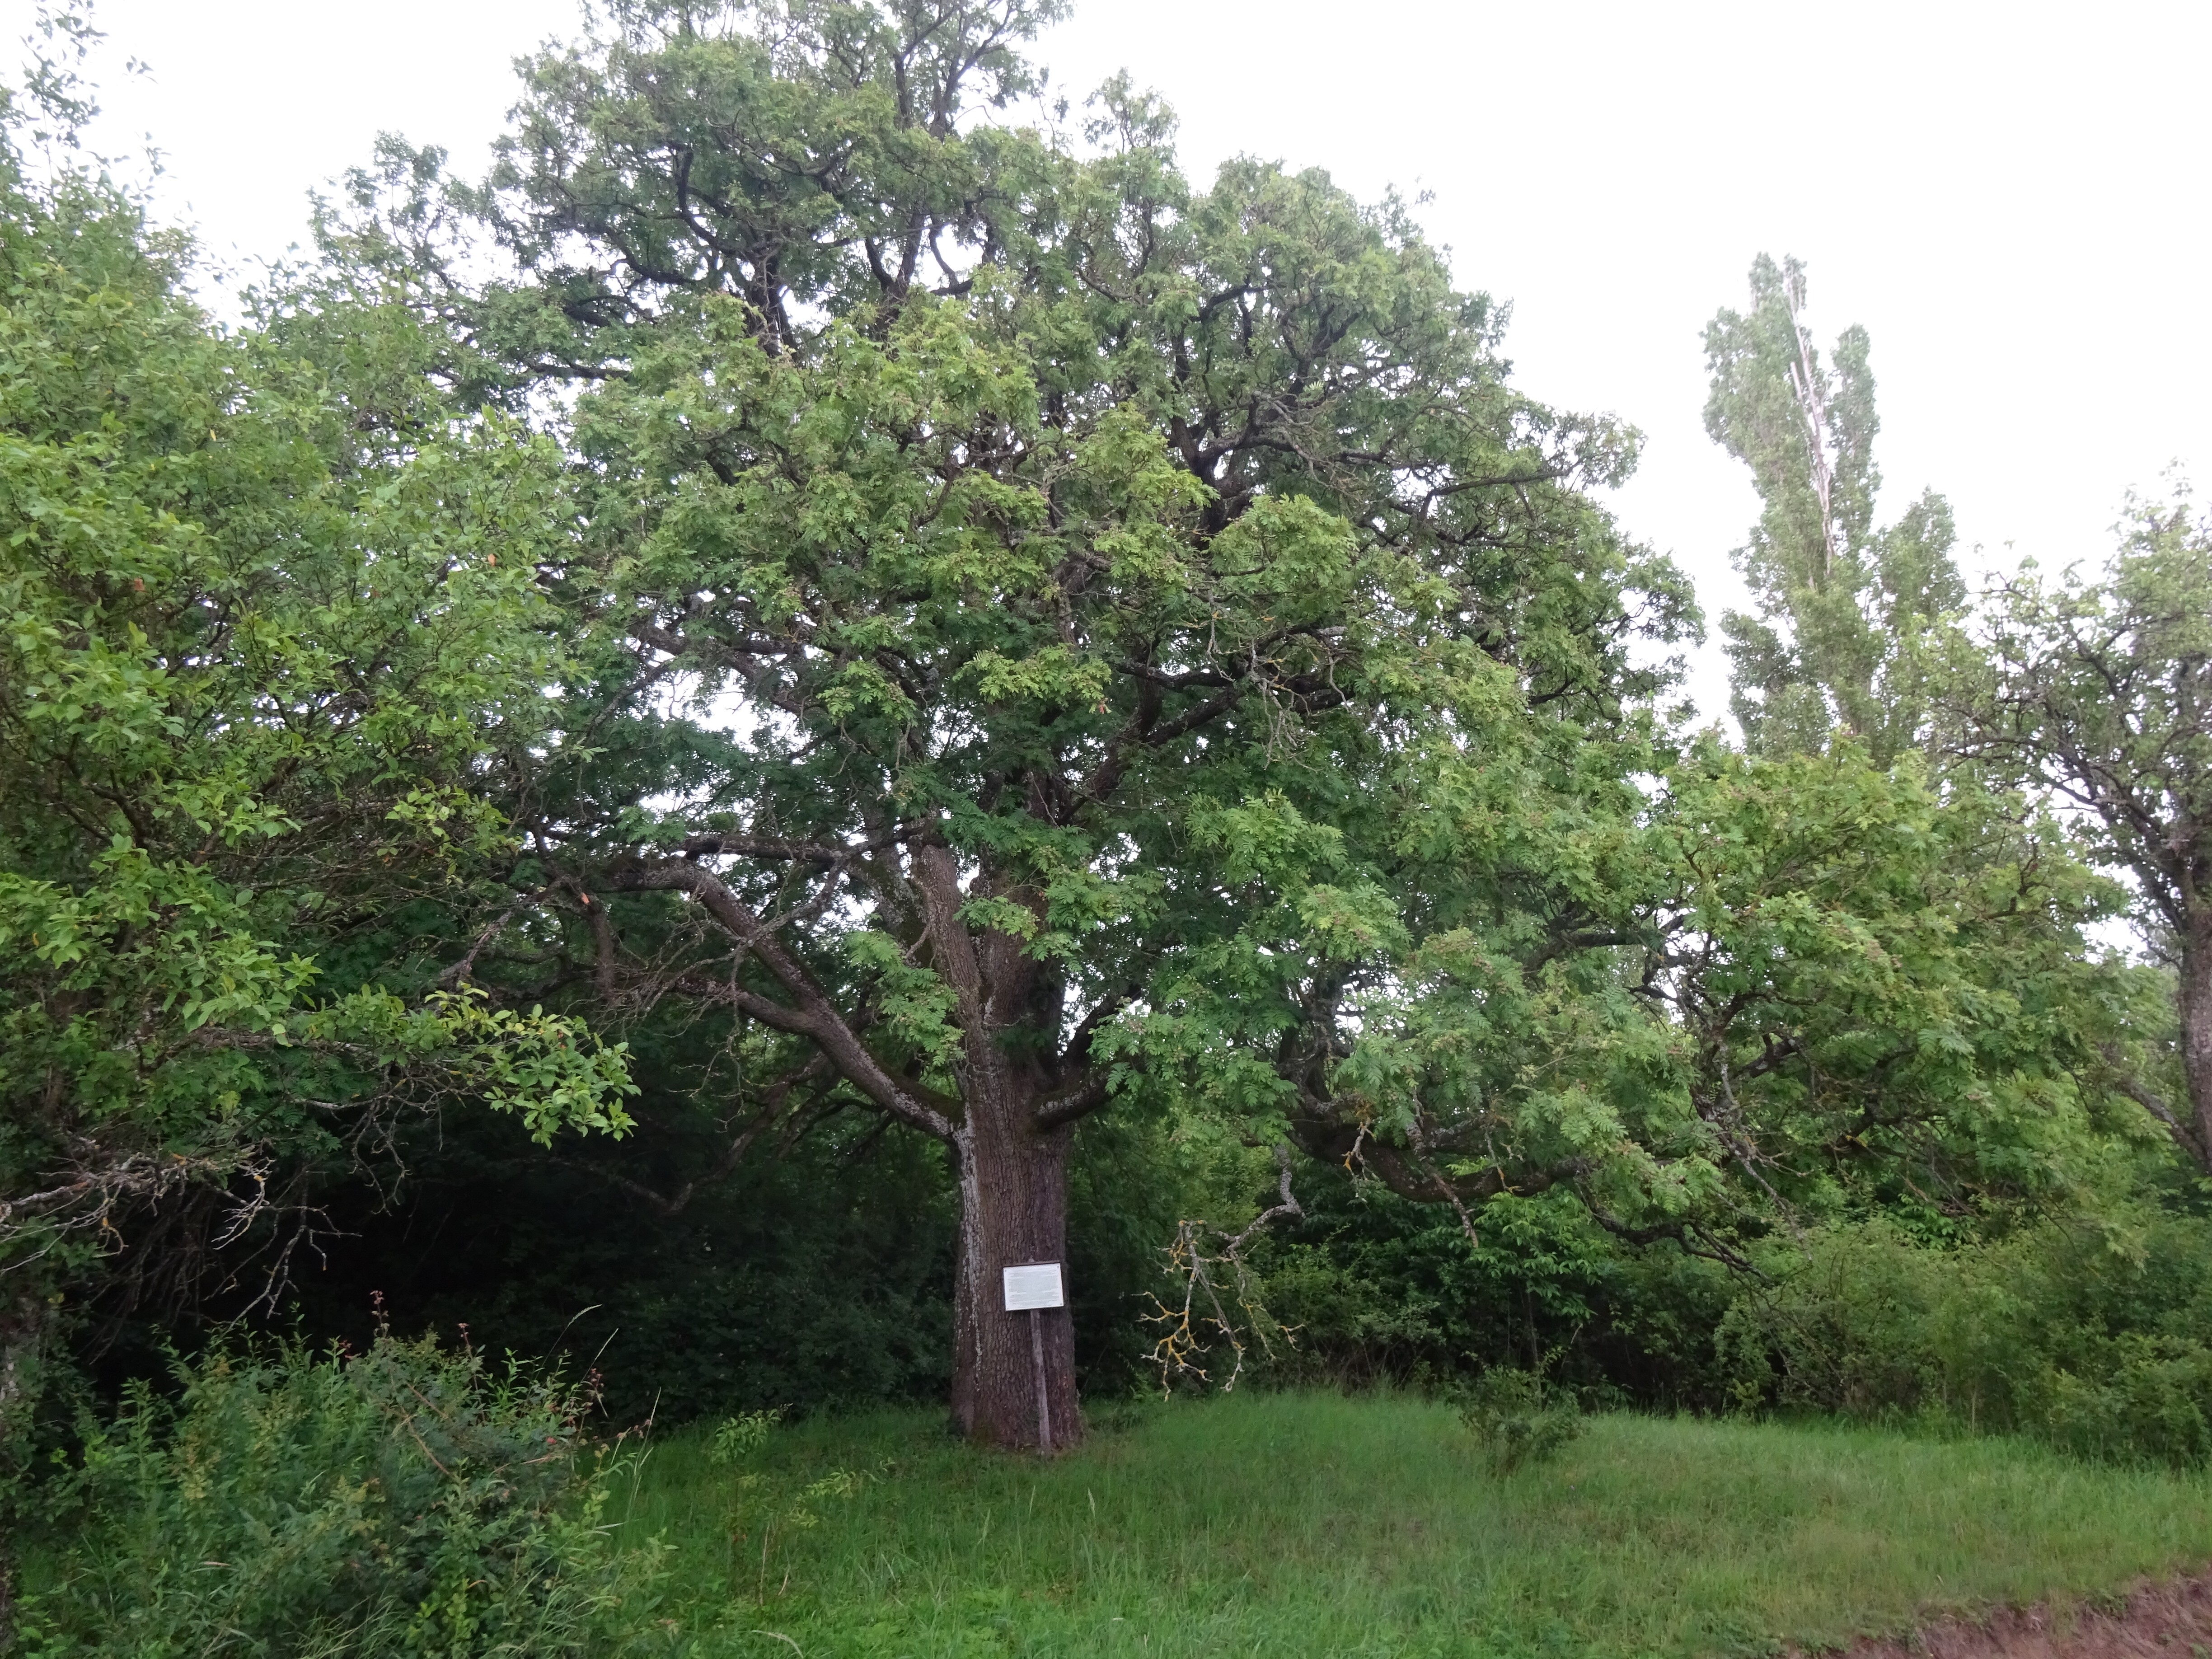 Házi berkenye - Sorbus domestica (Rippl-Rónai Múzeum CC BY-NC-ND)